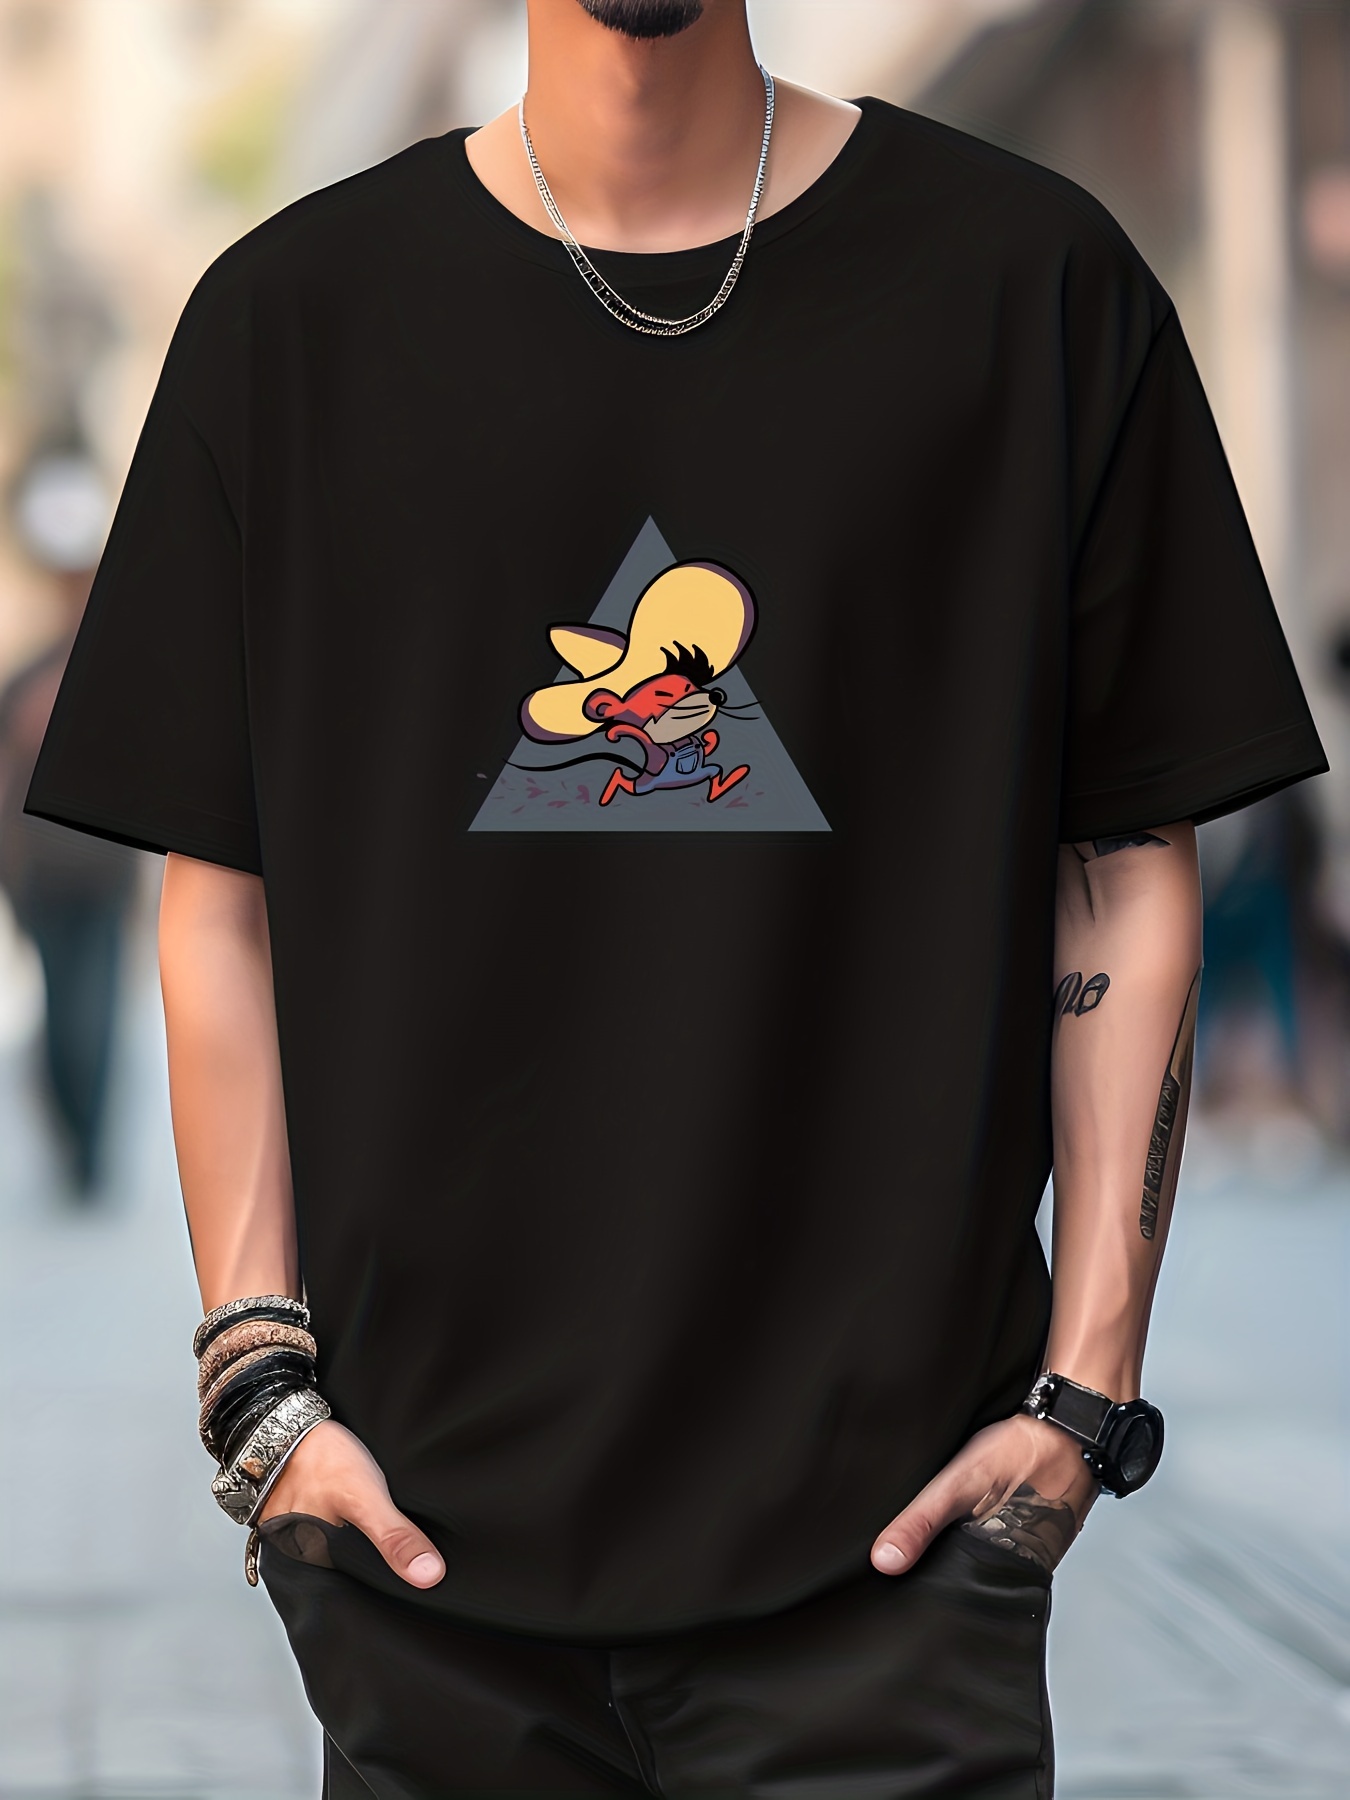 Louis Vuitton Mickey Mouse Monogram Mix Brown Shirt - Tagotee